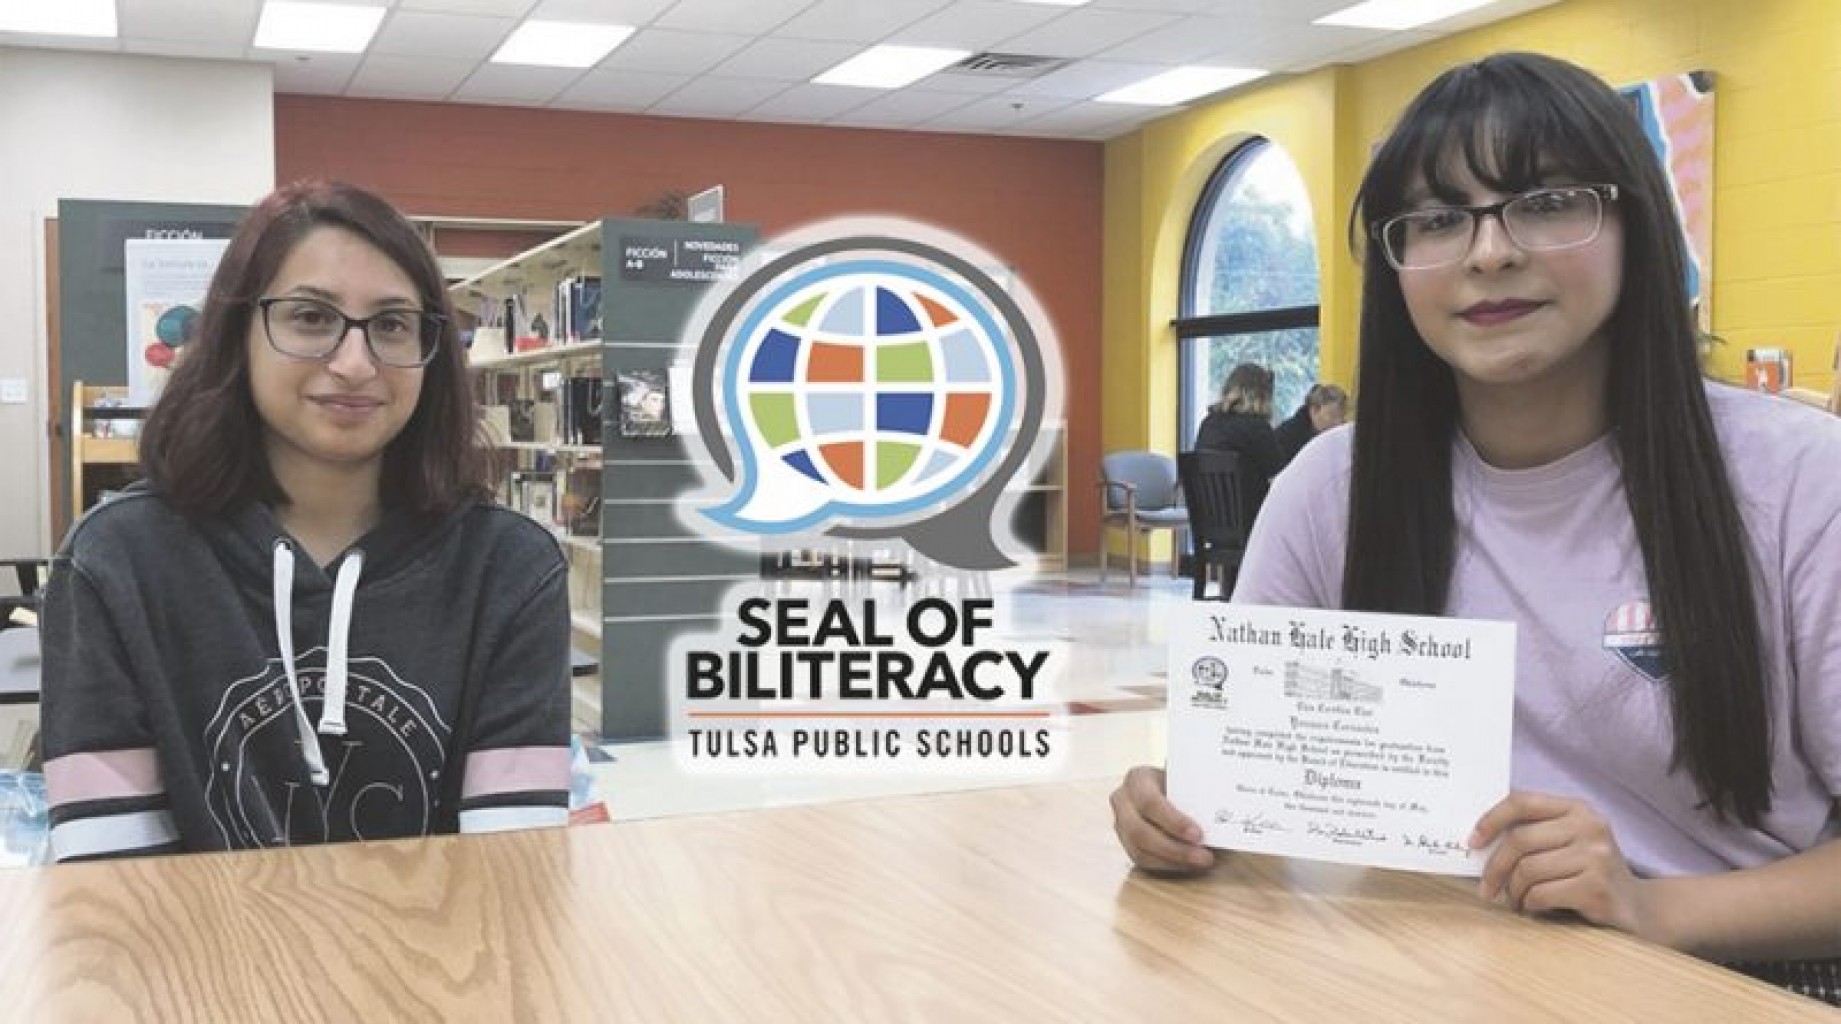 Fifty-three graduates from Tulsa Public Schools earn Seal of Biliteracy